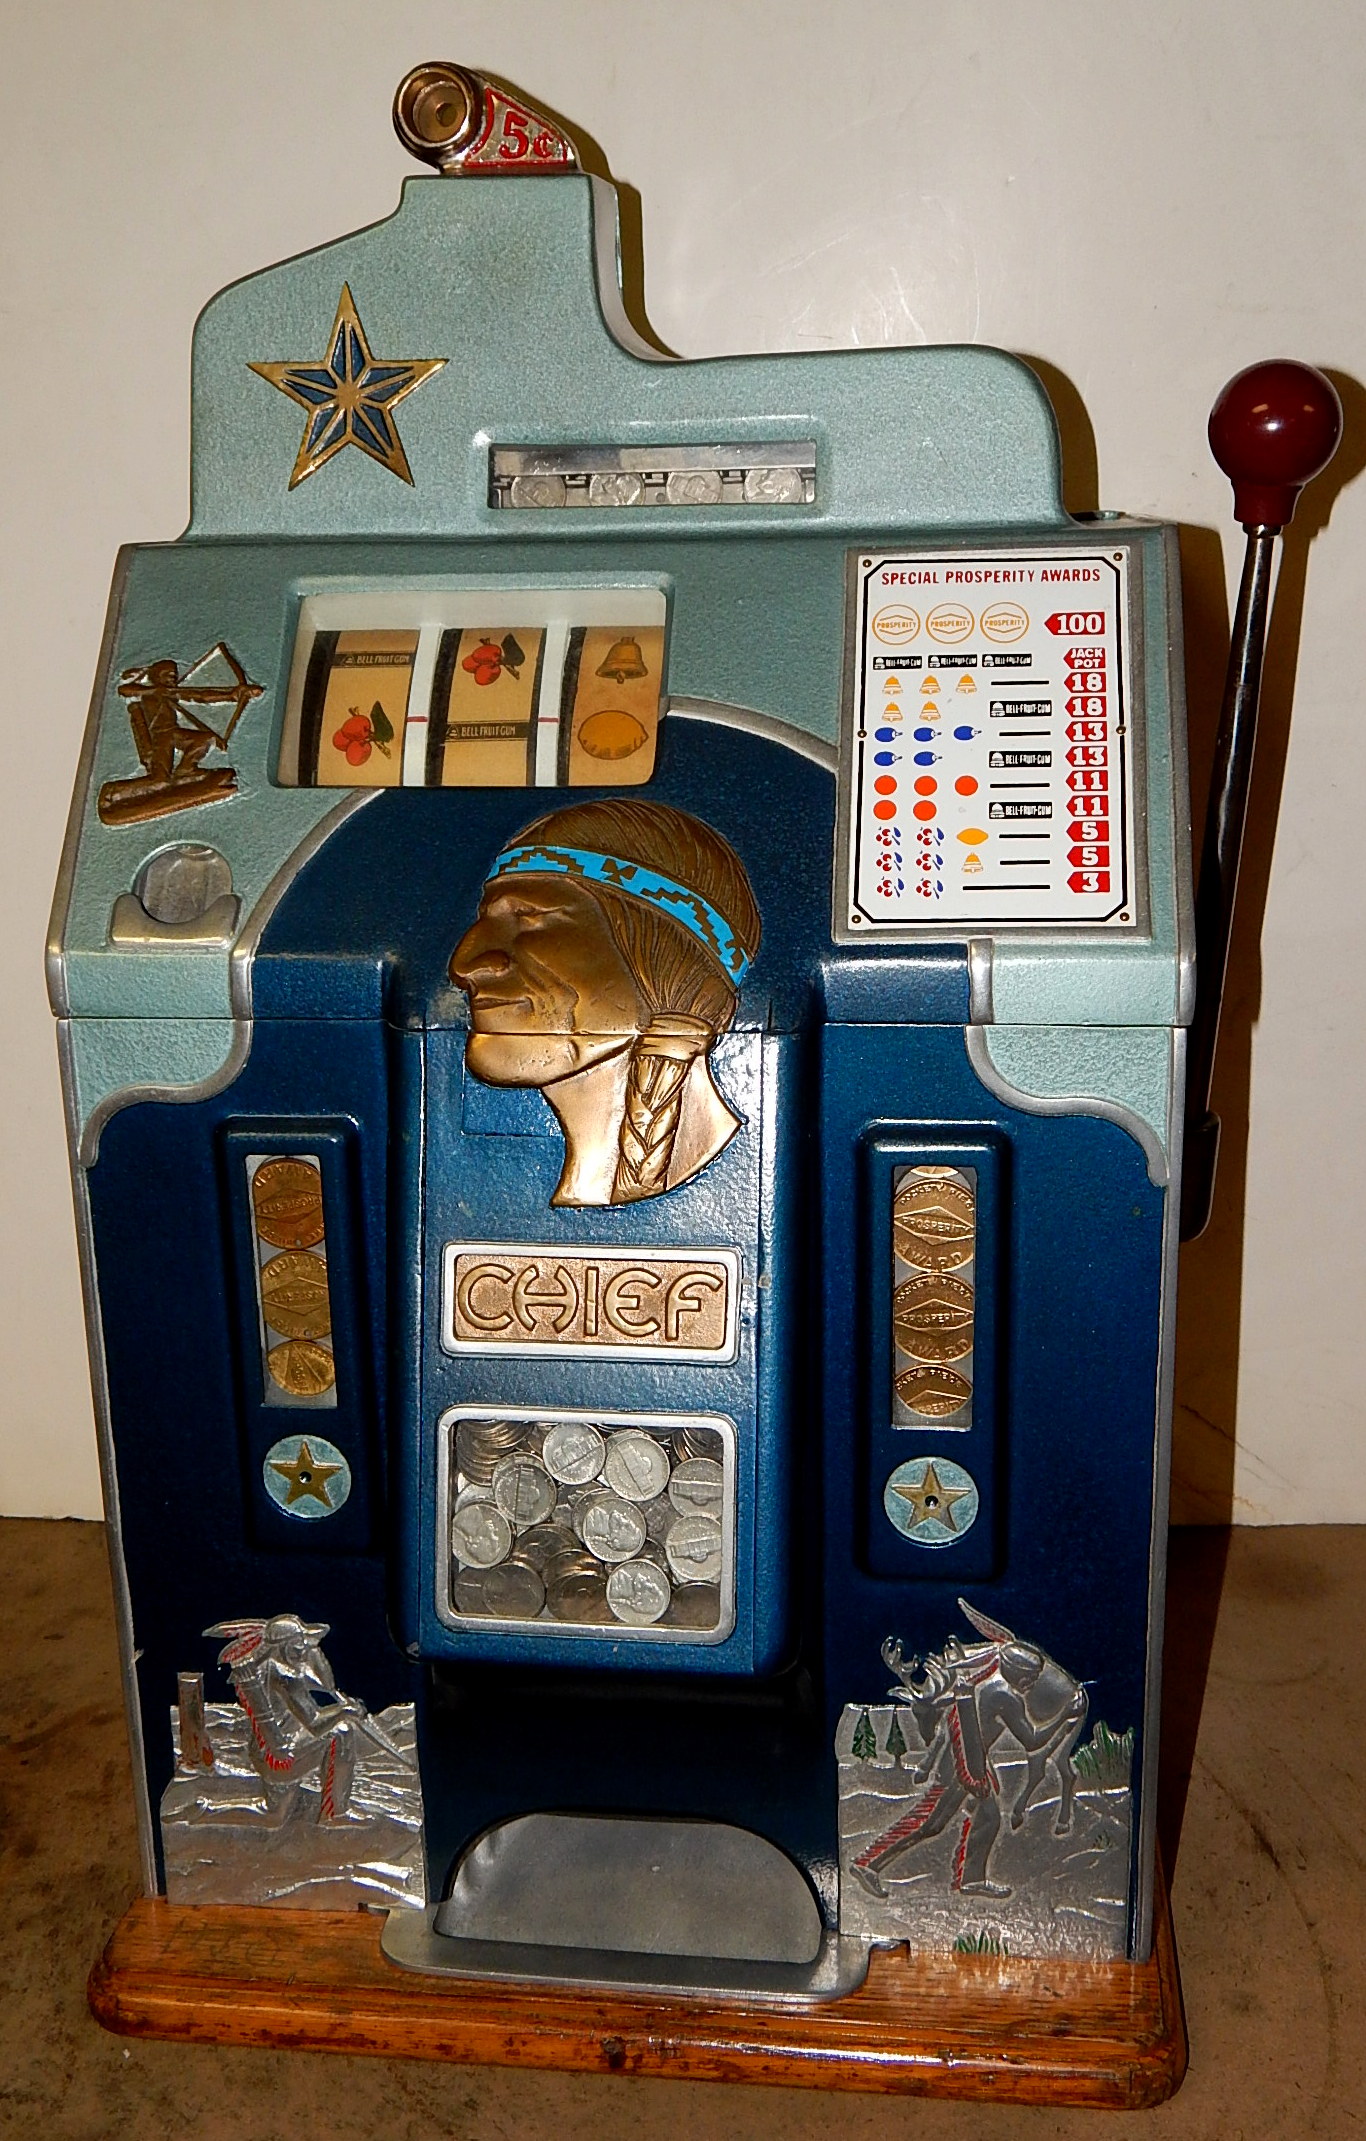 Old Slot Machine Prices